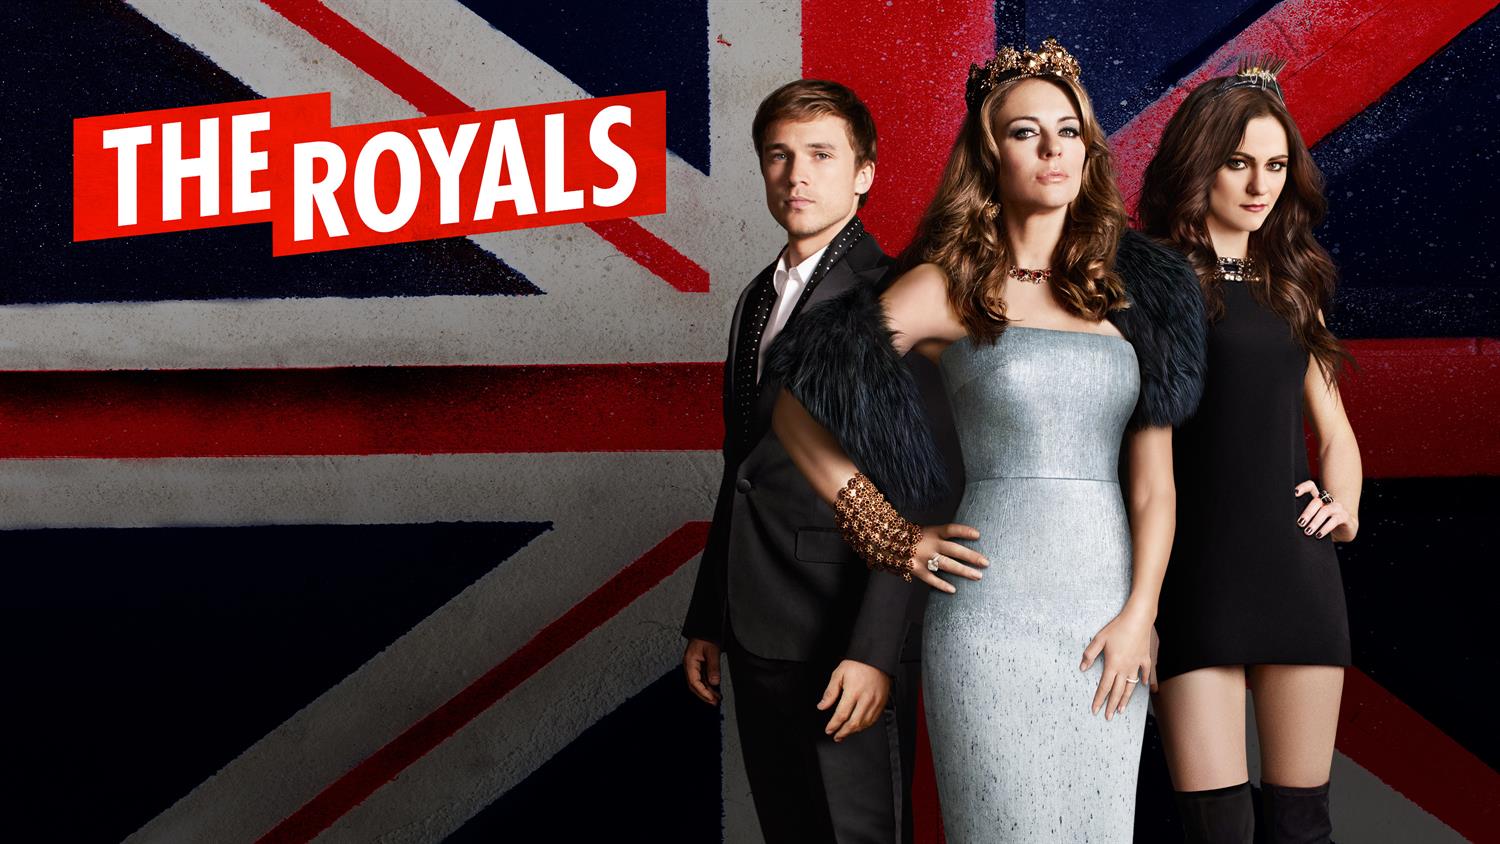 The Royals (2015) Backgrounds, Compatible - PC, Mobile, Gadgets| 1500x844 px